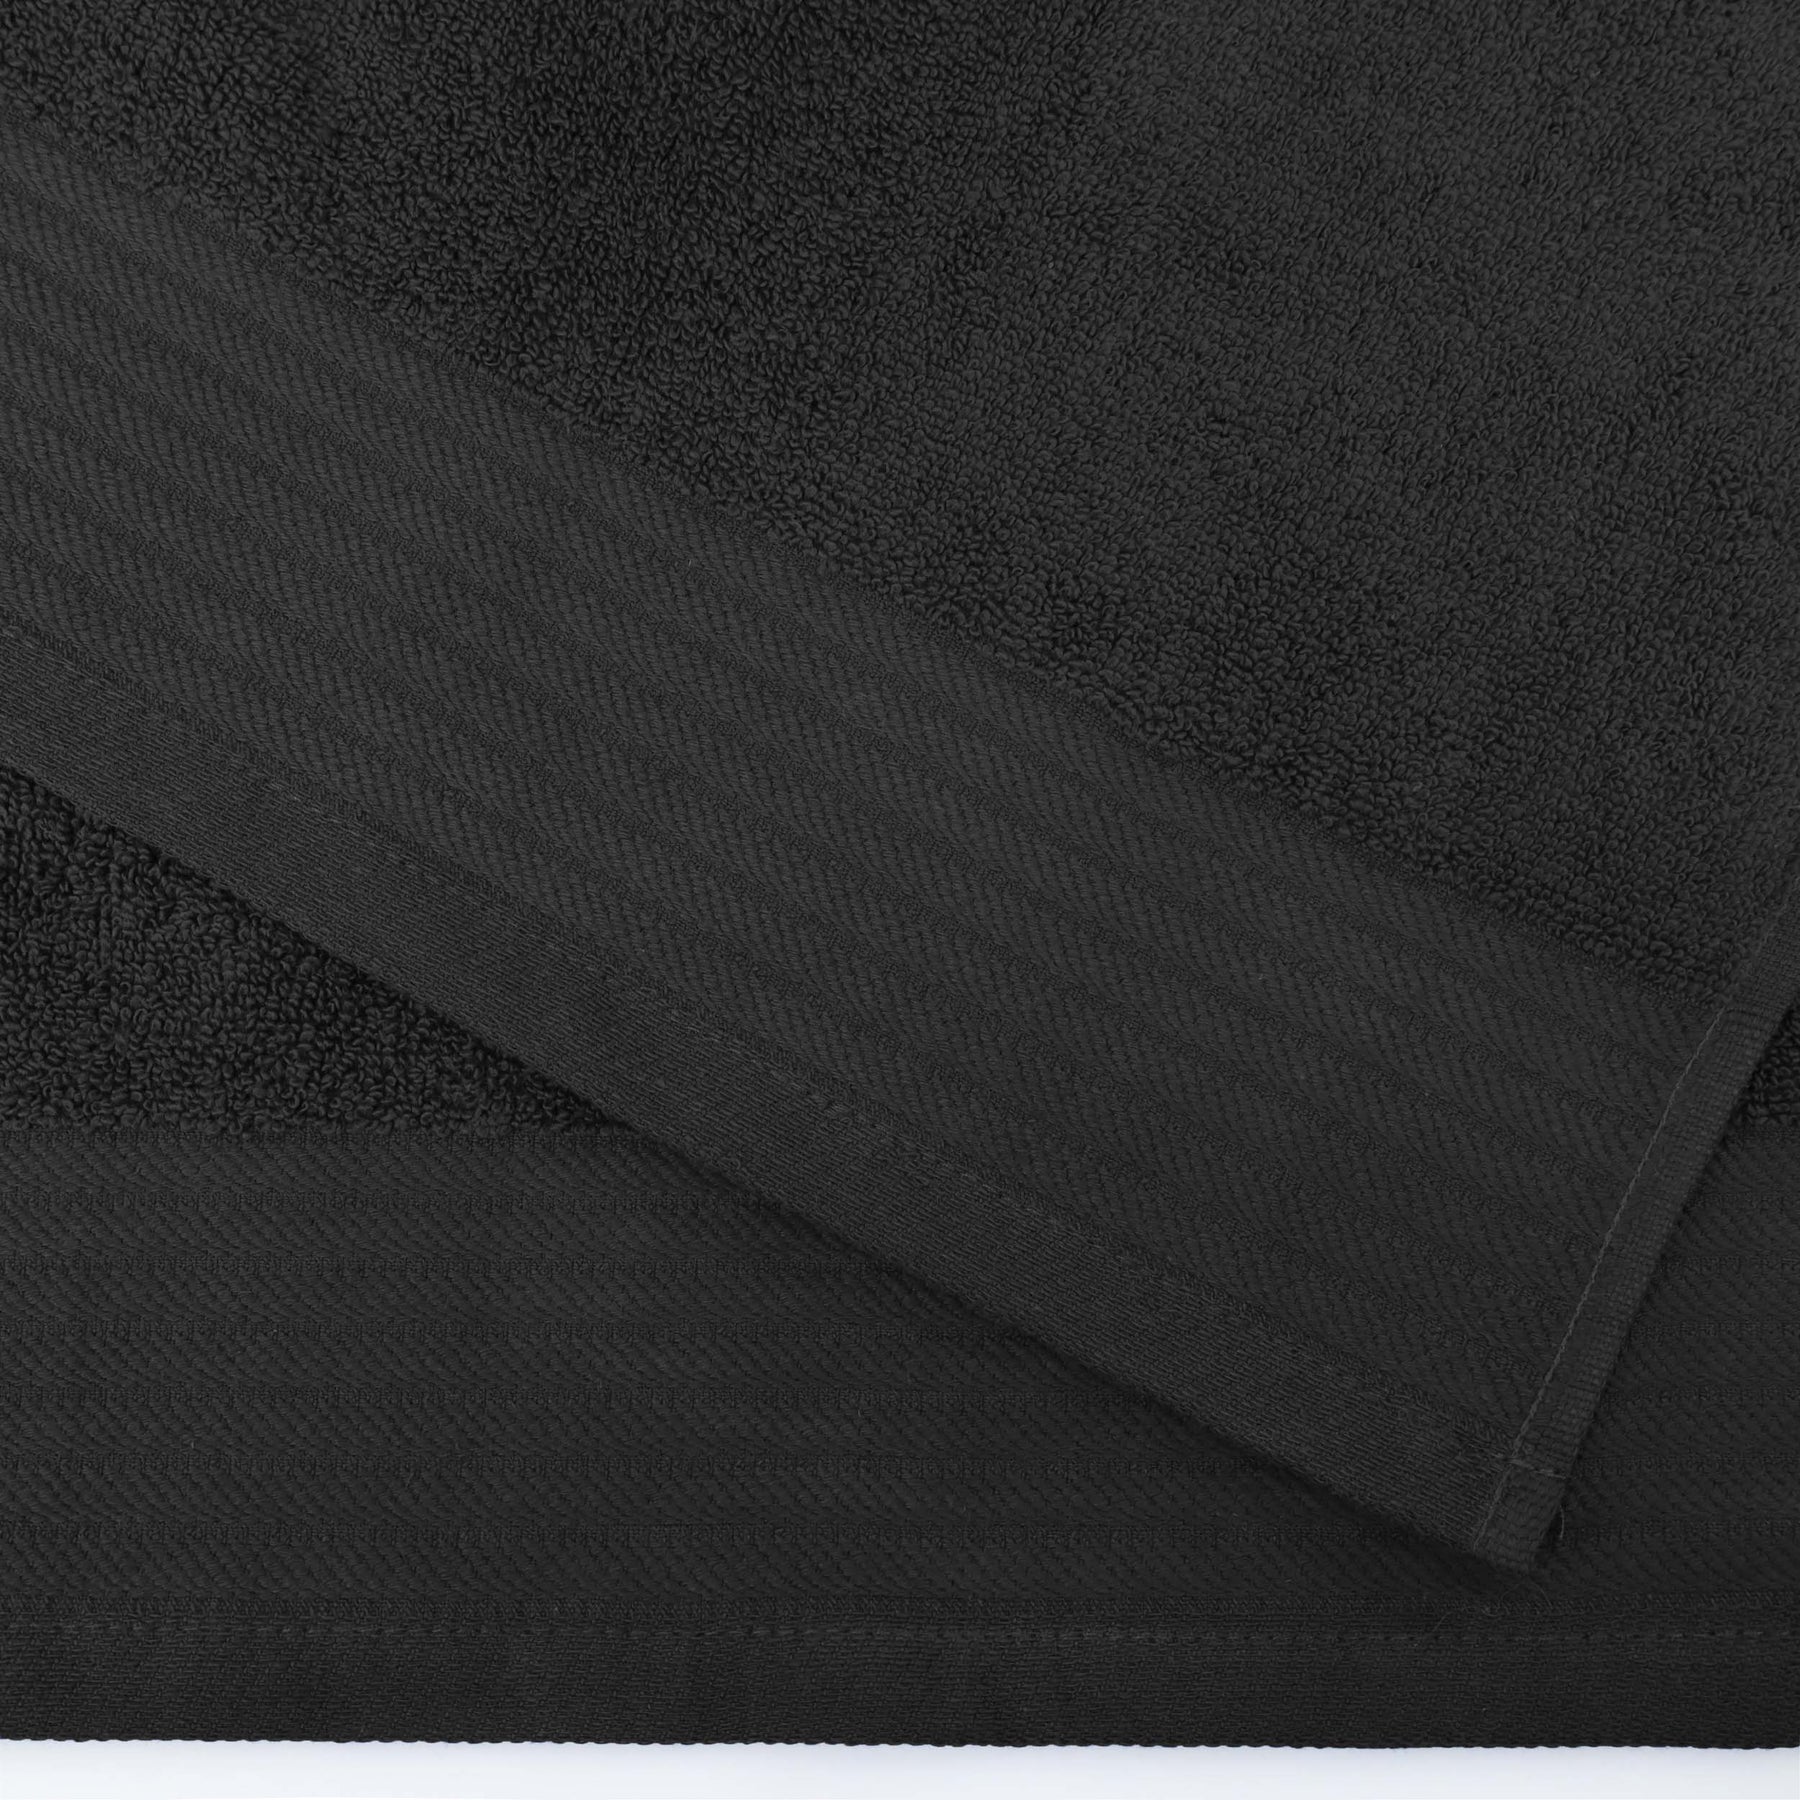 Premium Turkish Cotton Jacquard Herringbone and Solid 12-Piece Face Towel/ Washcloth Set - Black